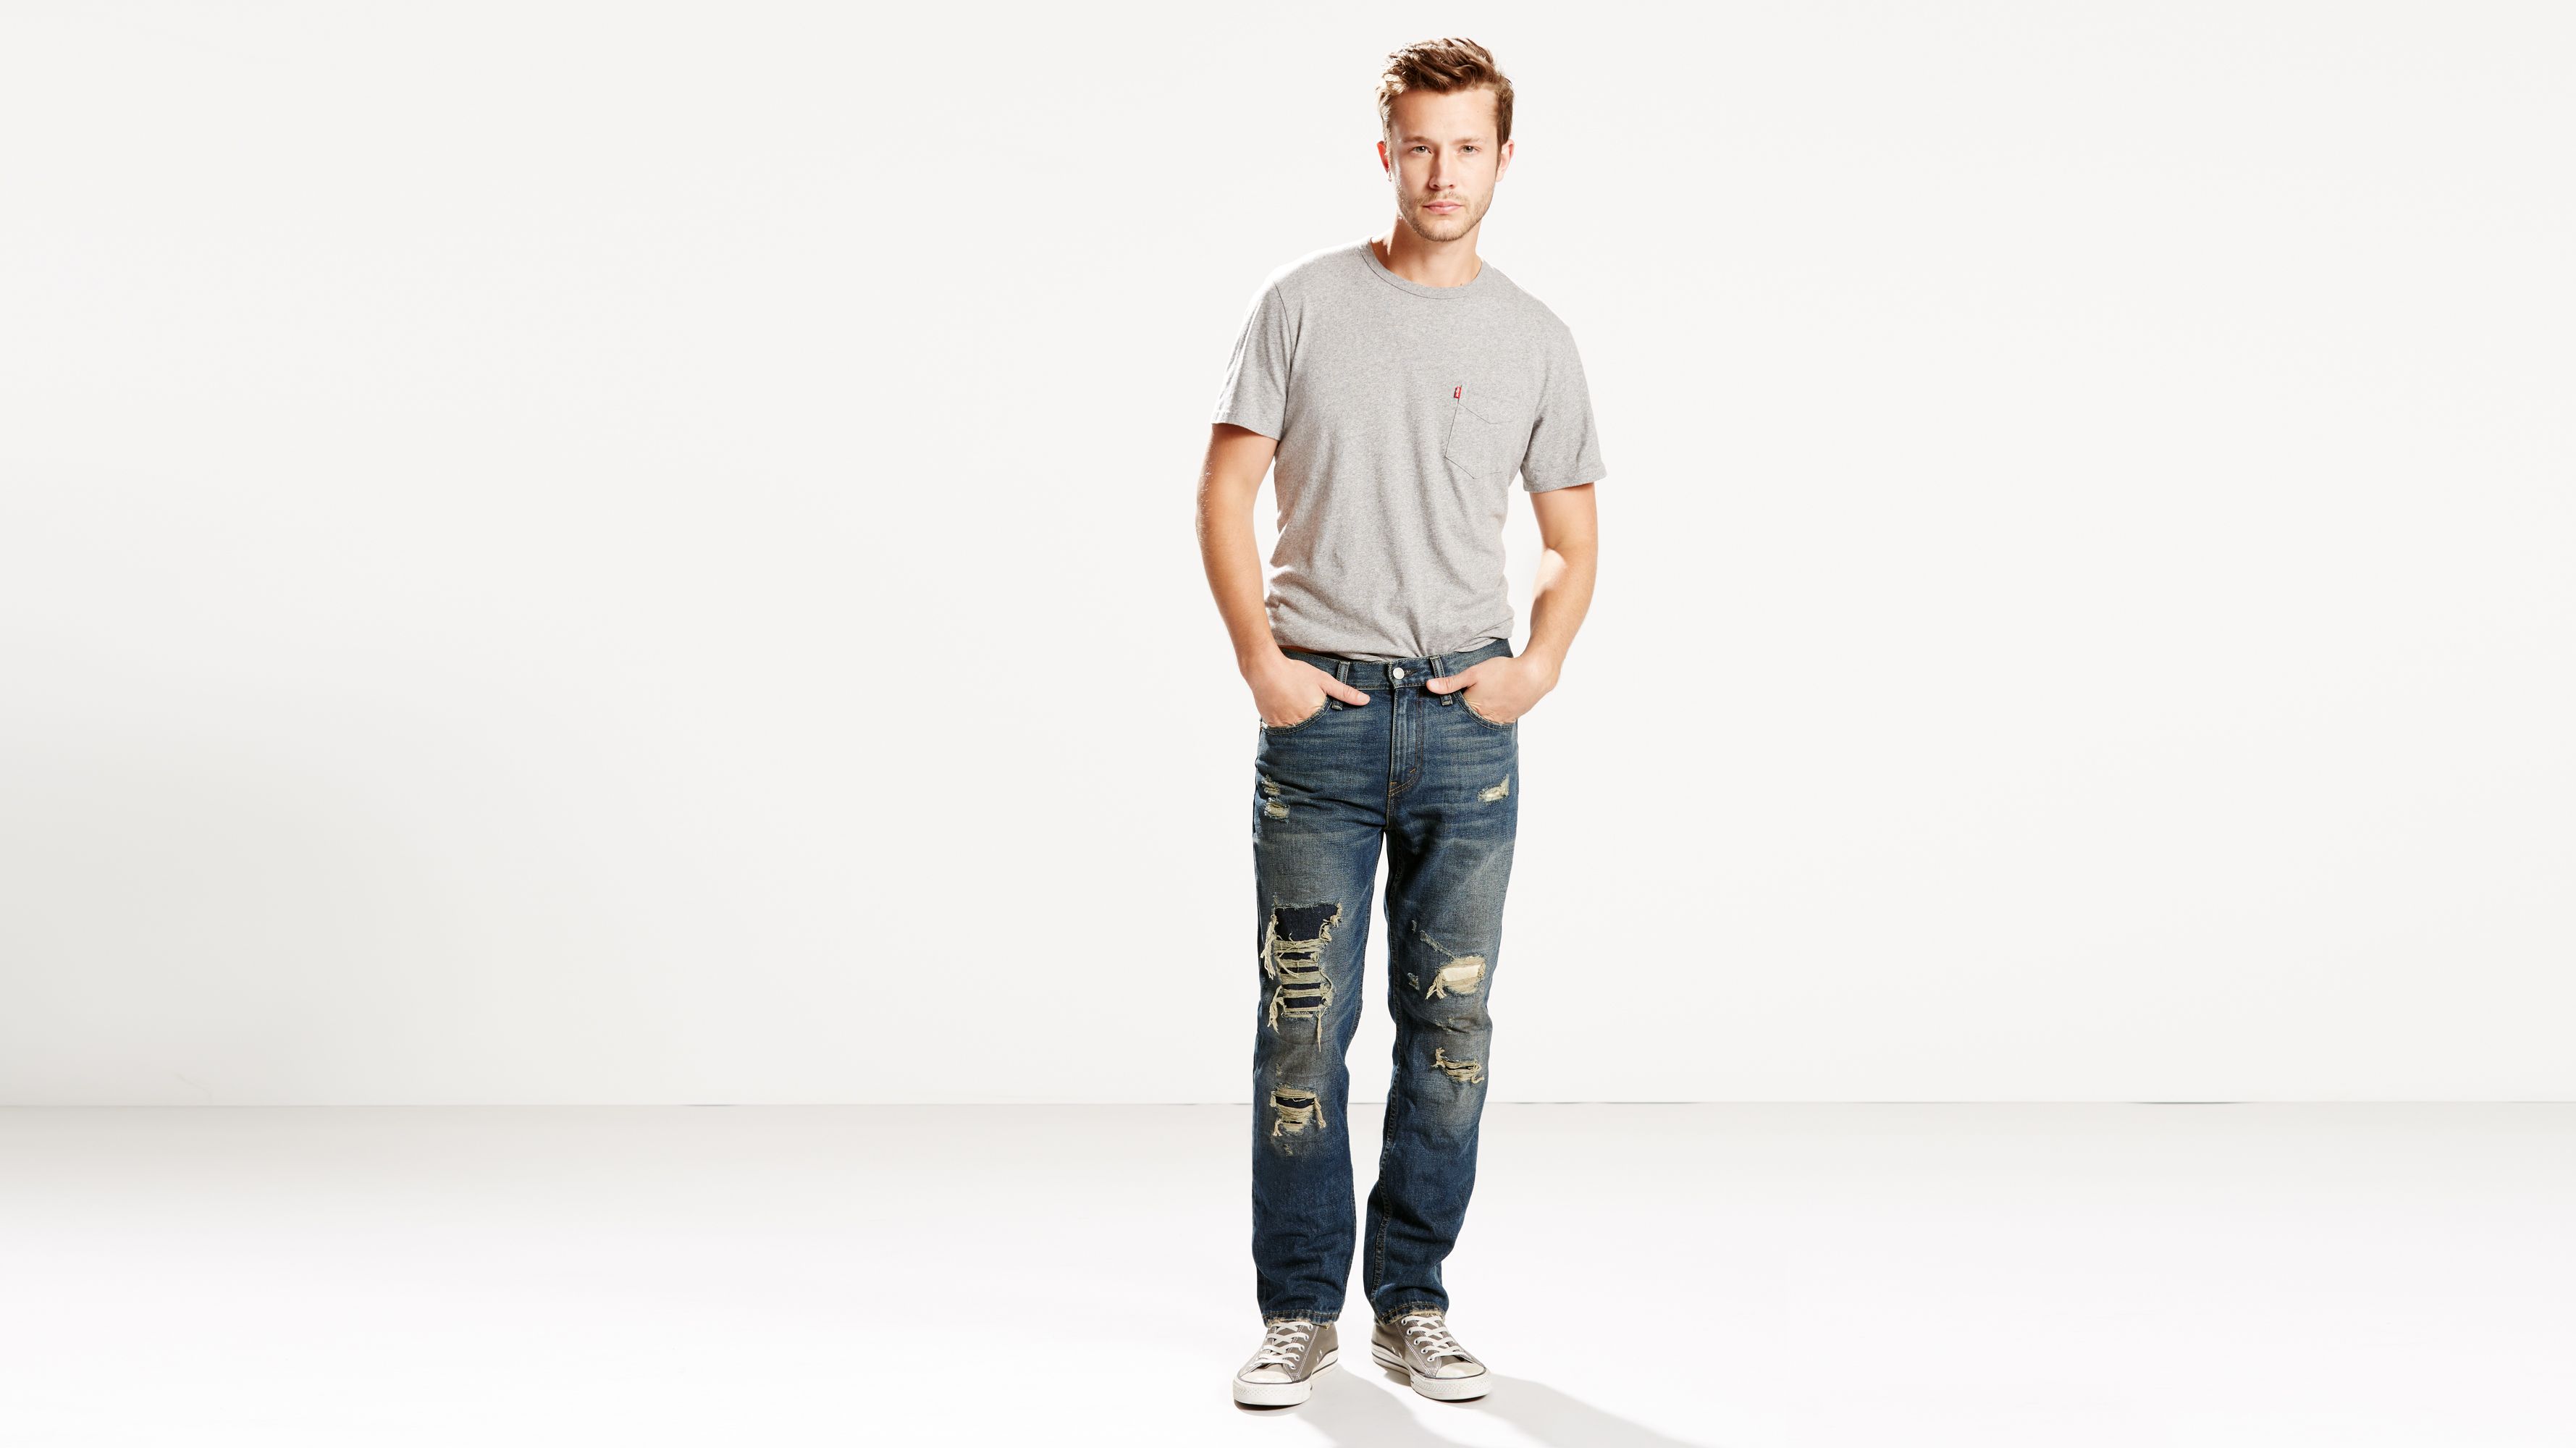 levi's 511 slim fit distressed jeans